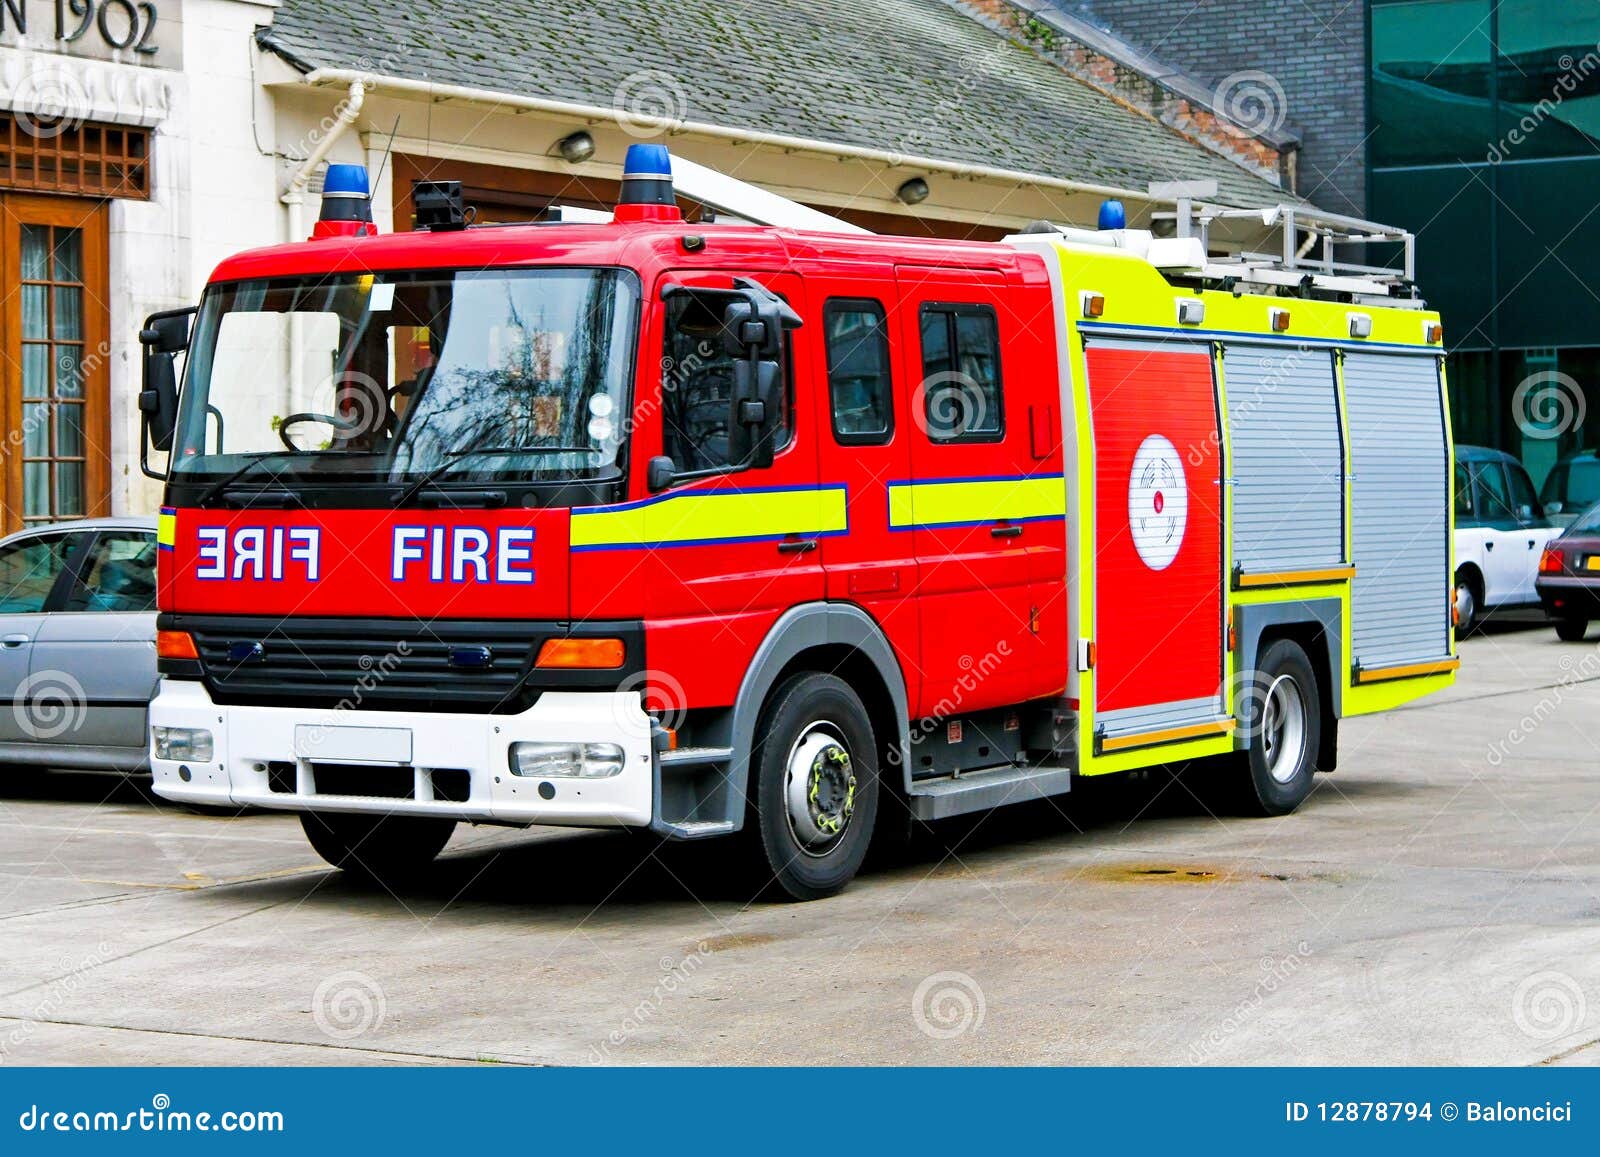 Fire truck stock photo. Image of firelighters, siren - 12878794 Fire Truck Siren